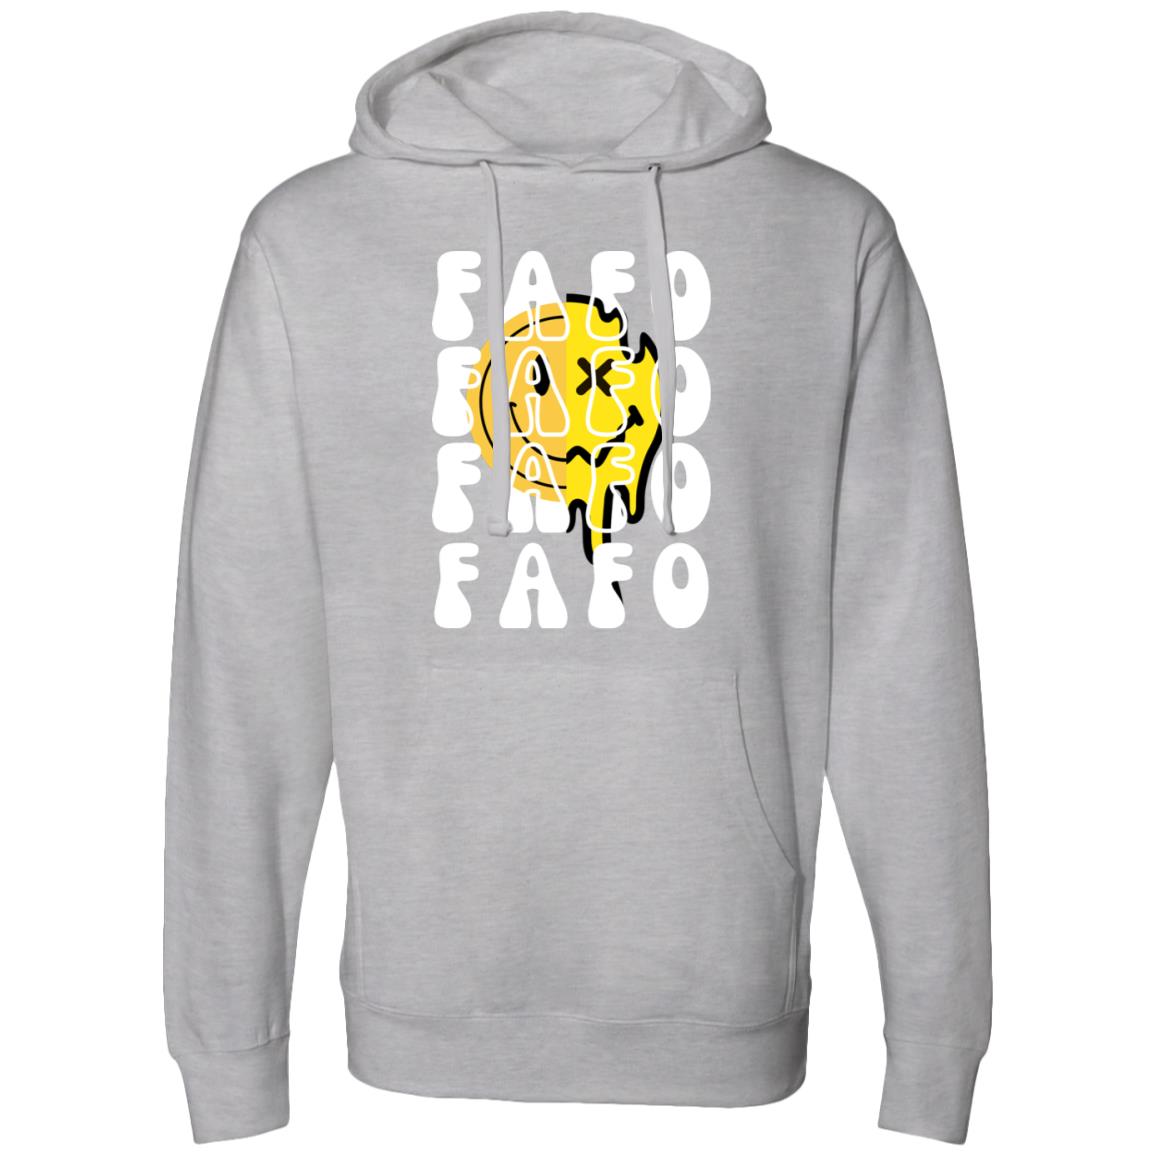 FAFO Retro Smile Midweight Hooded Sweatshirt - Expressive DeZien 